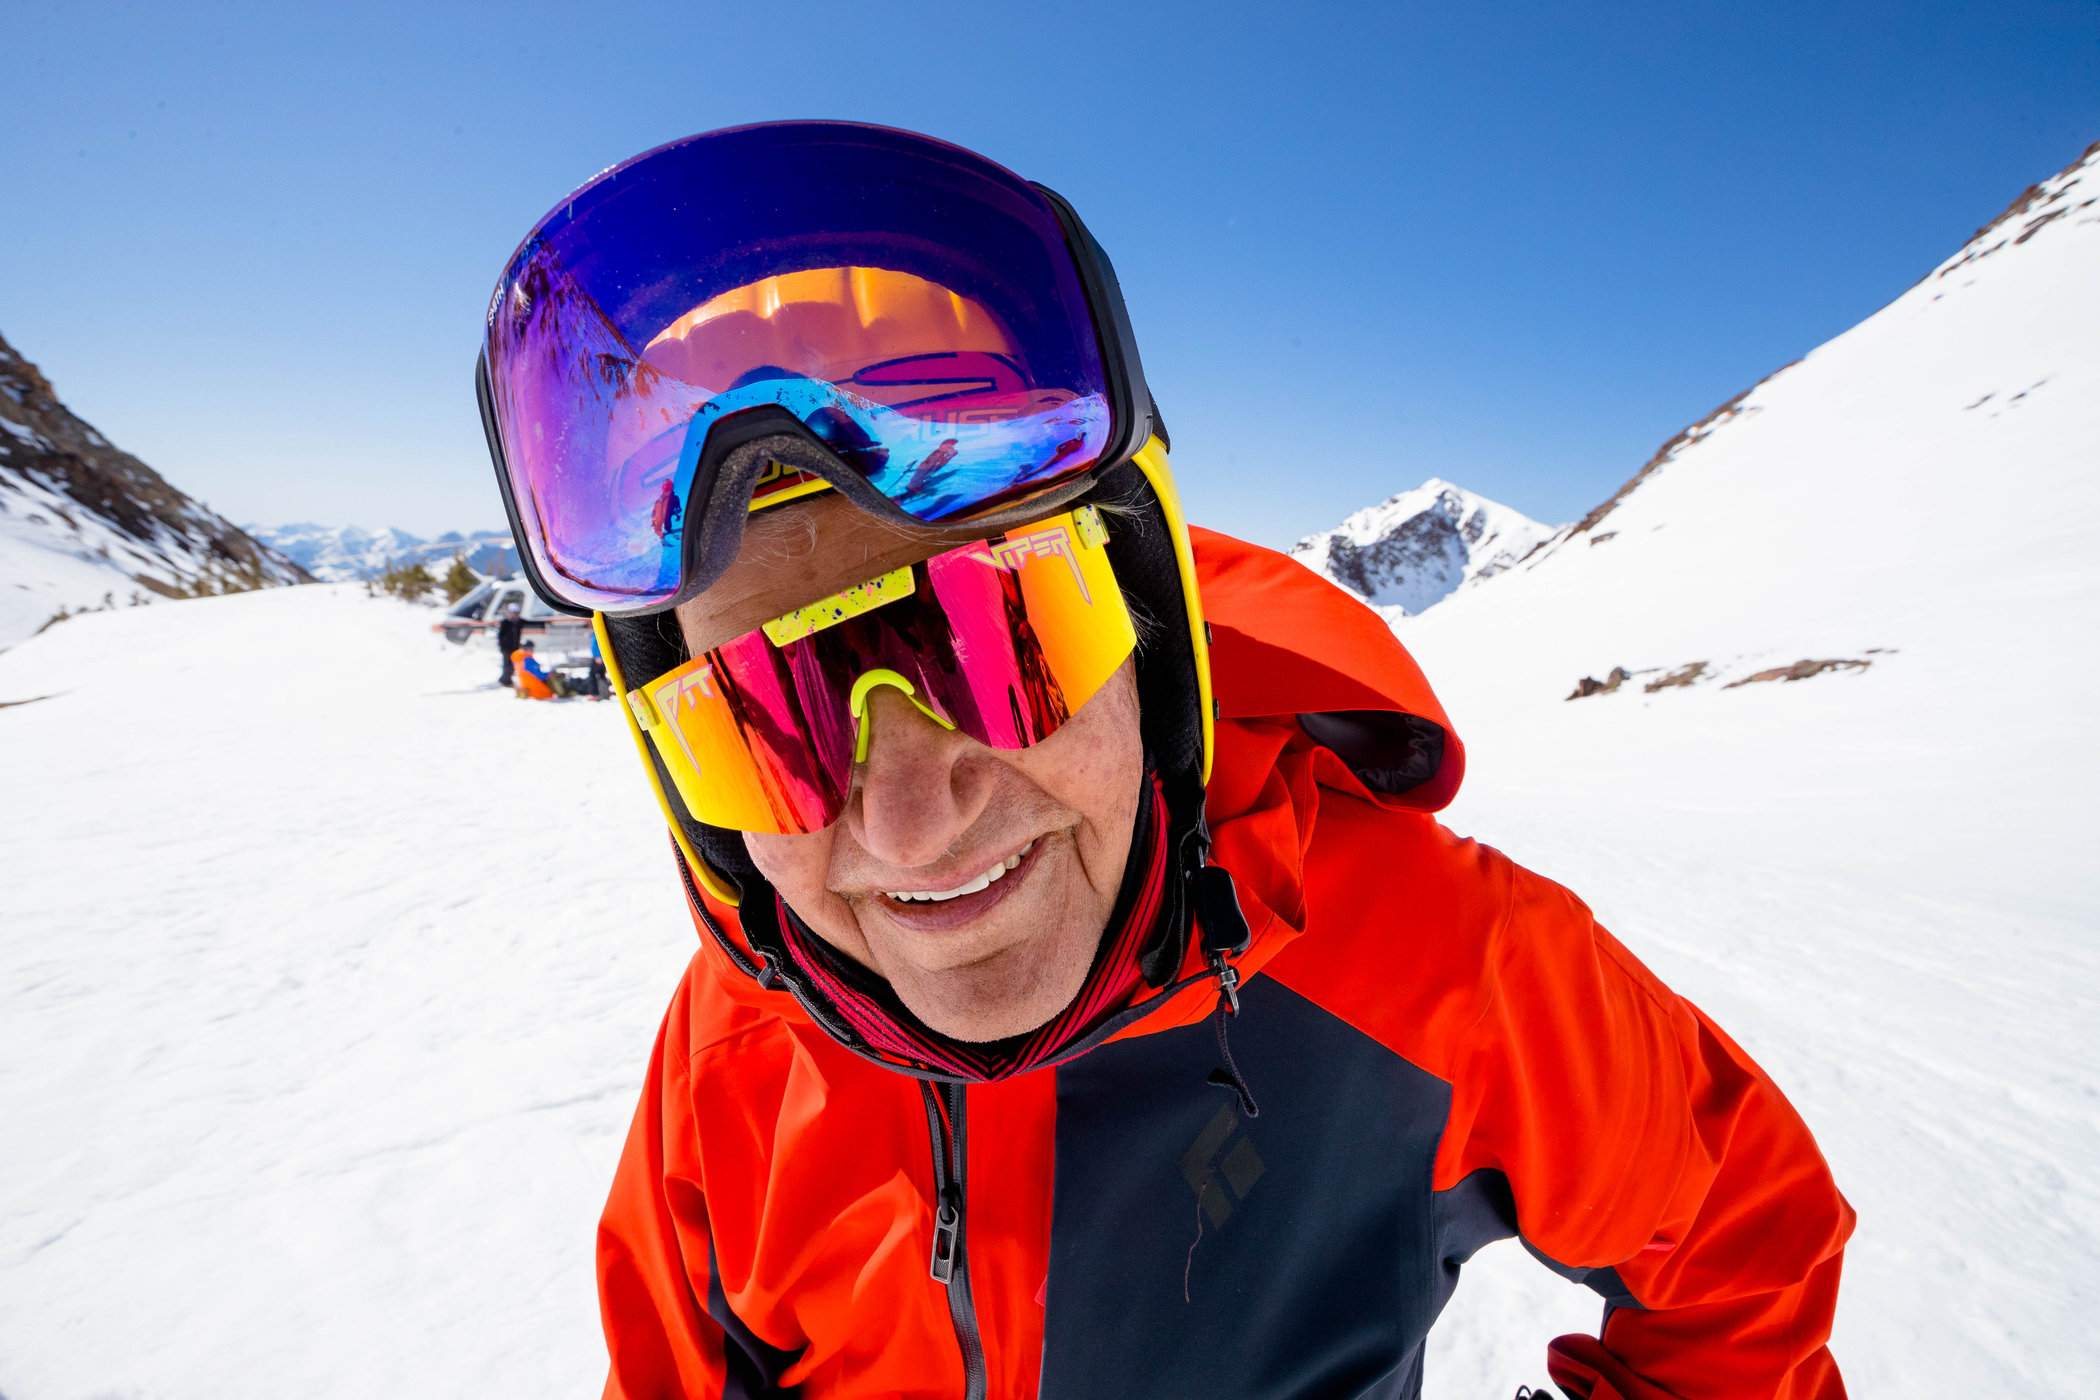 Junior Bounous with sunglasses before heli-skiing